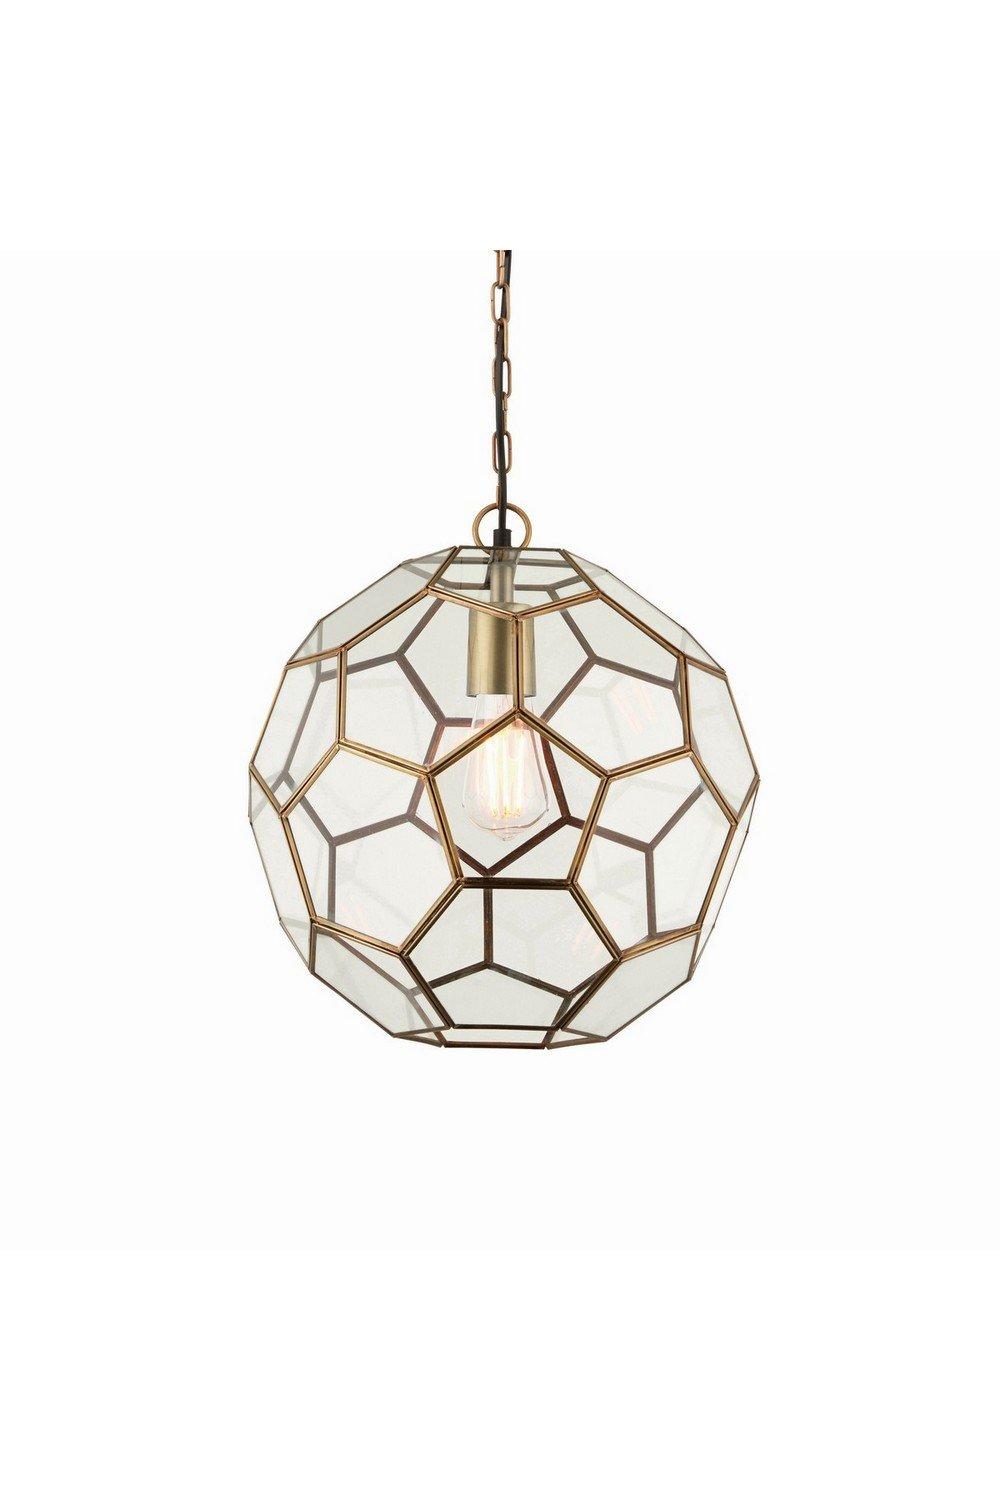 Miele 1 Light Spherical Ceiling Pendant Antique Brass Glass E27